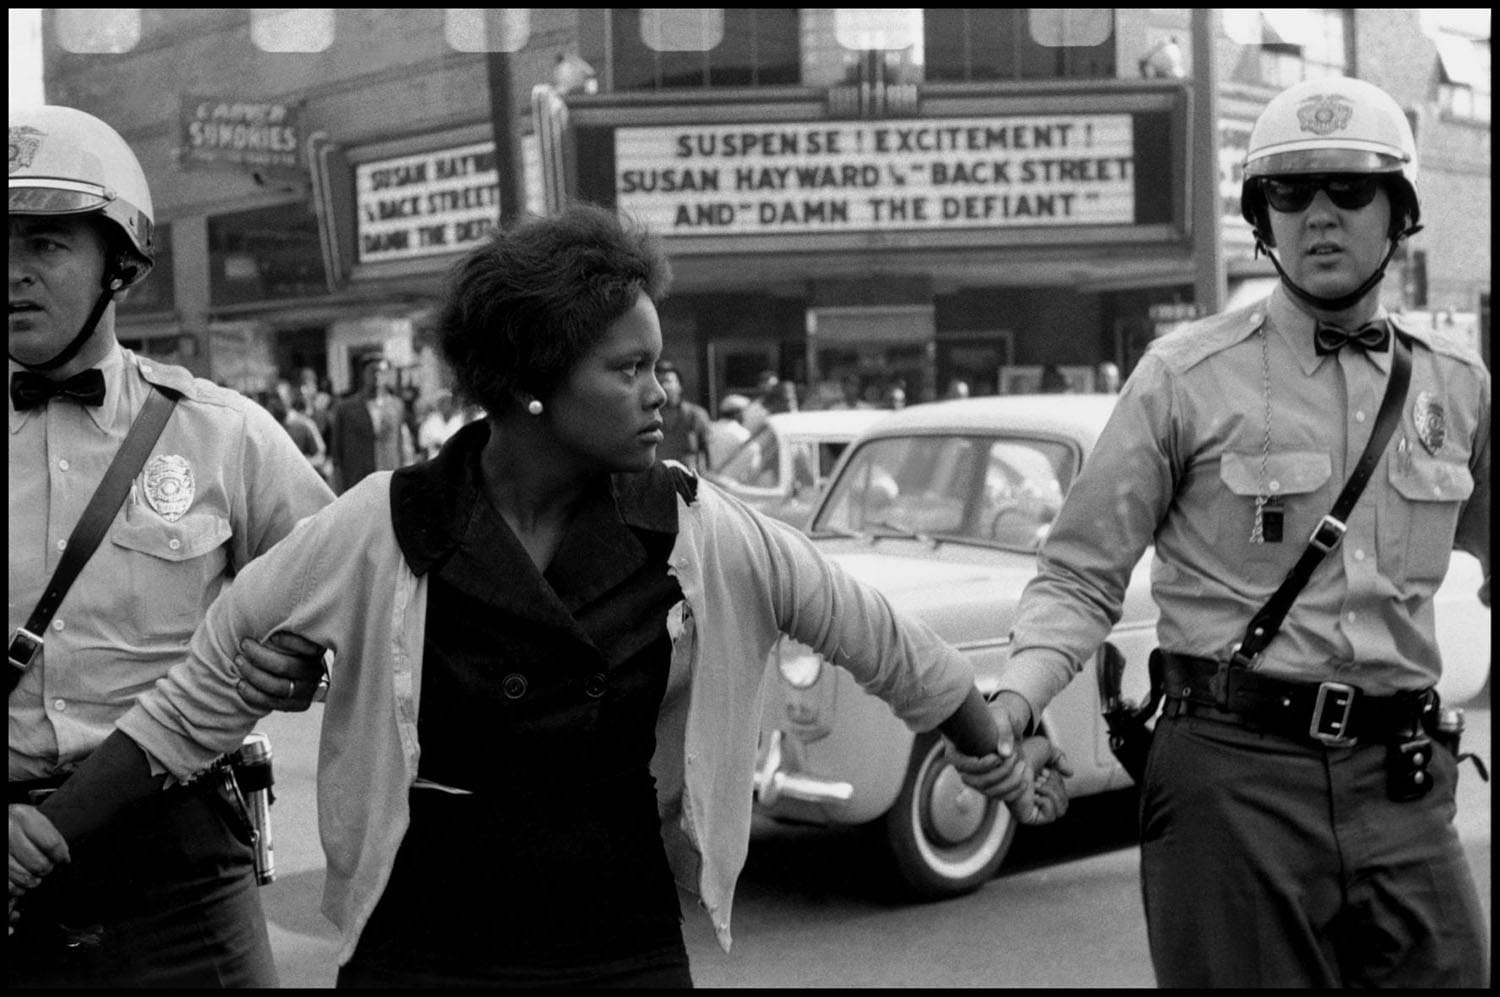 Image: USA. Alabama. Birmingham. 1963. Arrest of a demonstrator. "Damn the Defiant!" (Copyright Bruce Davidson)